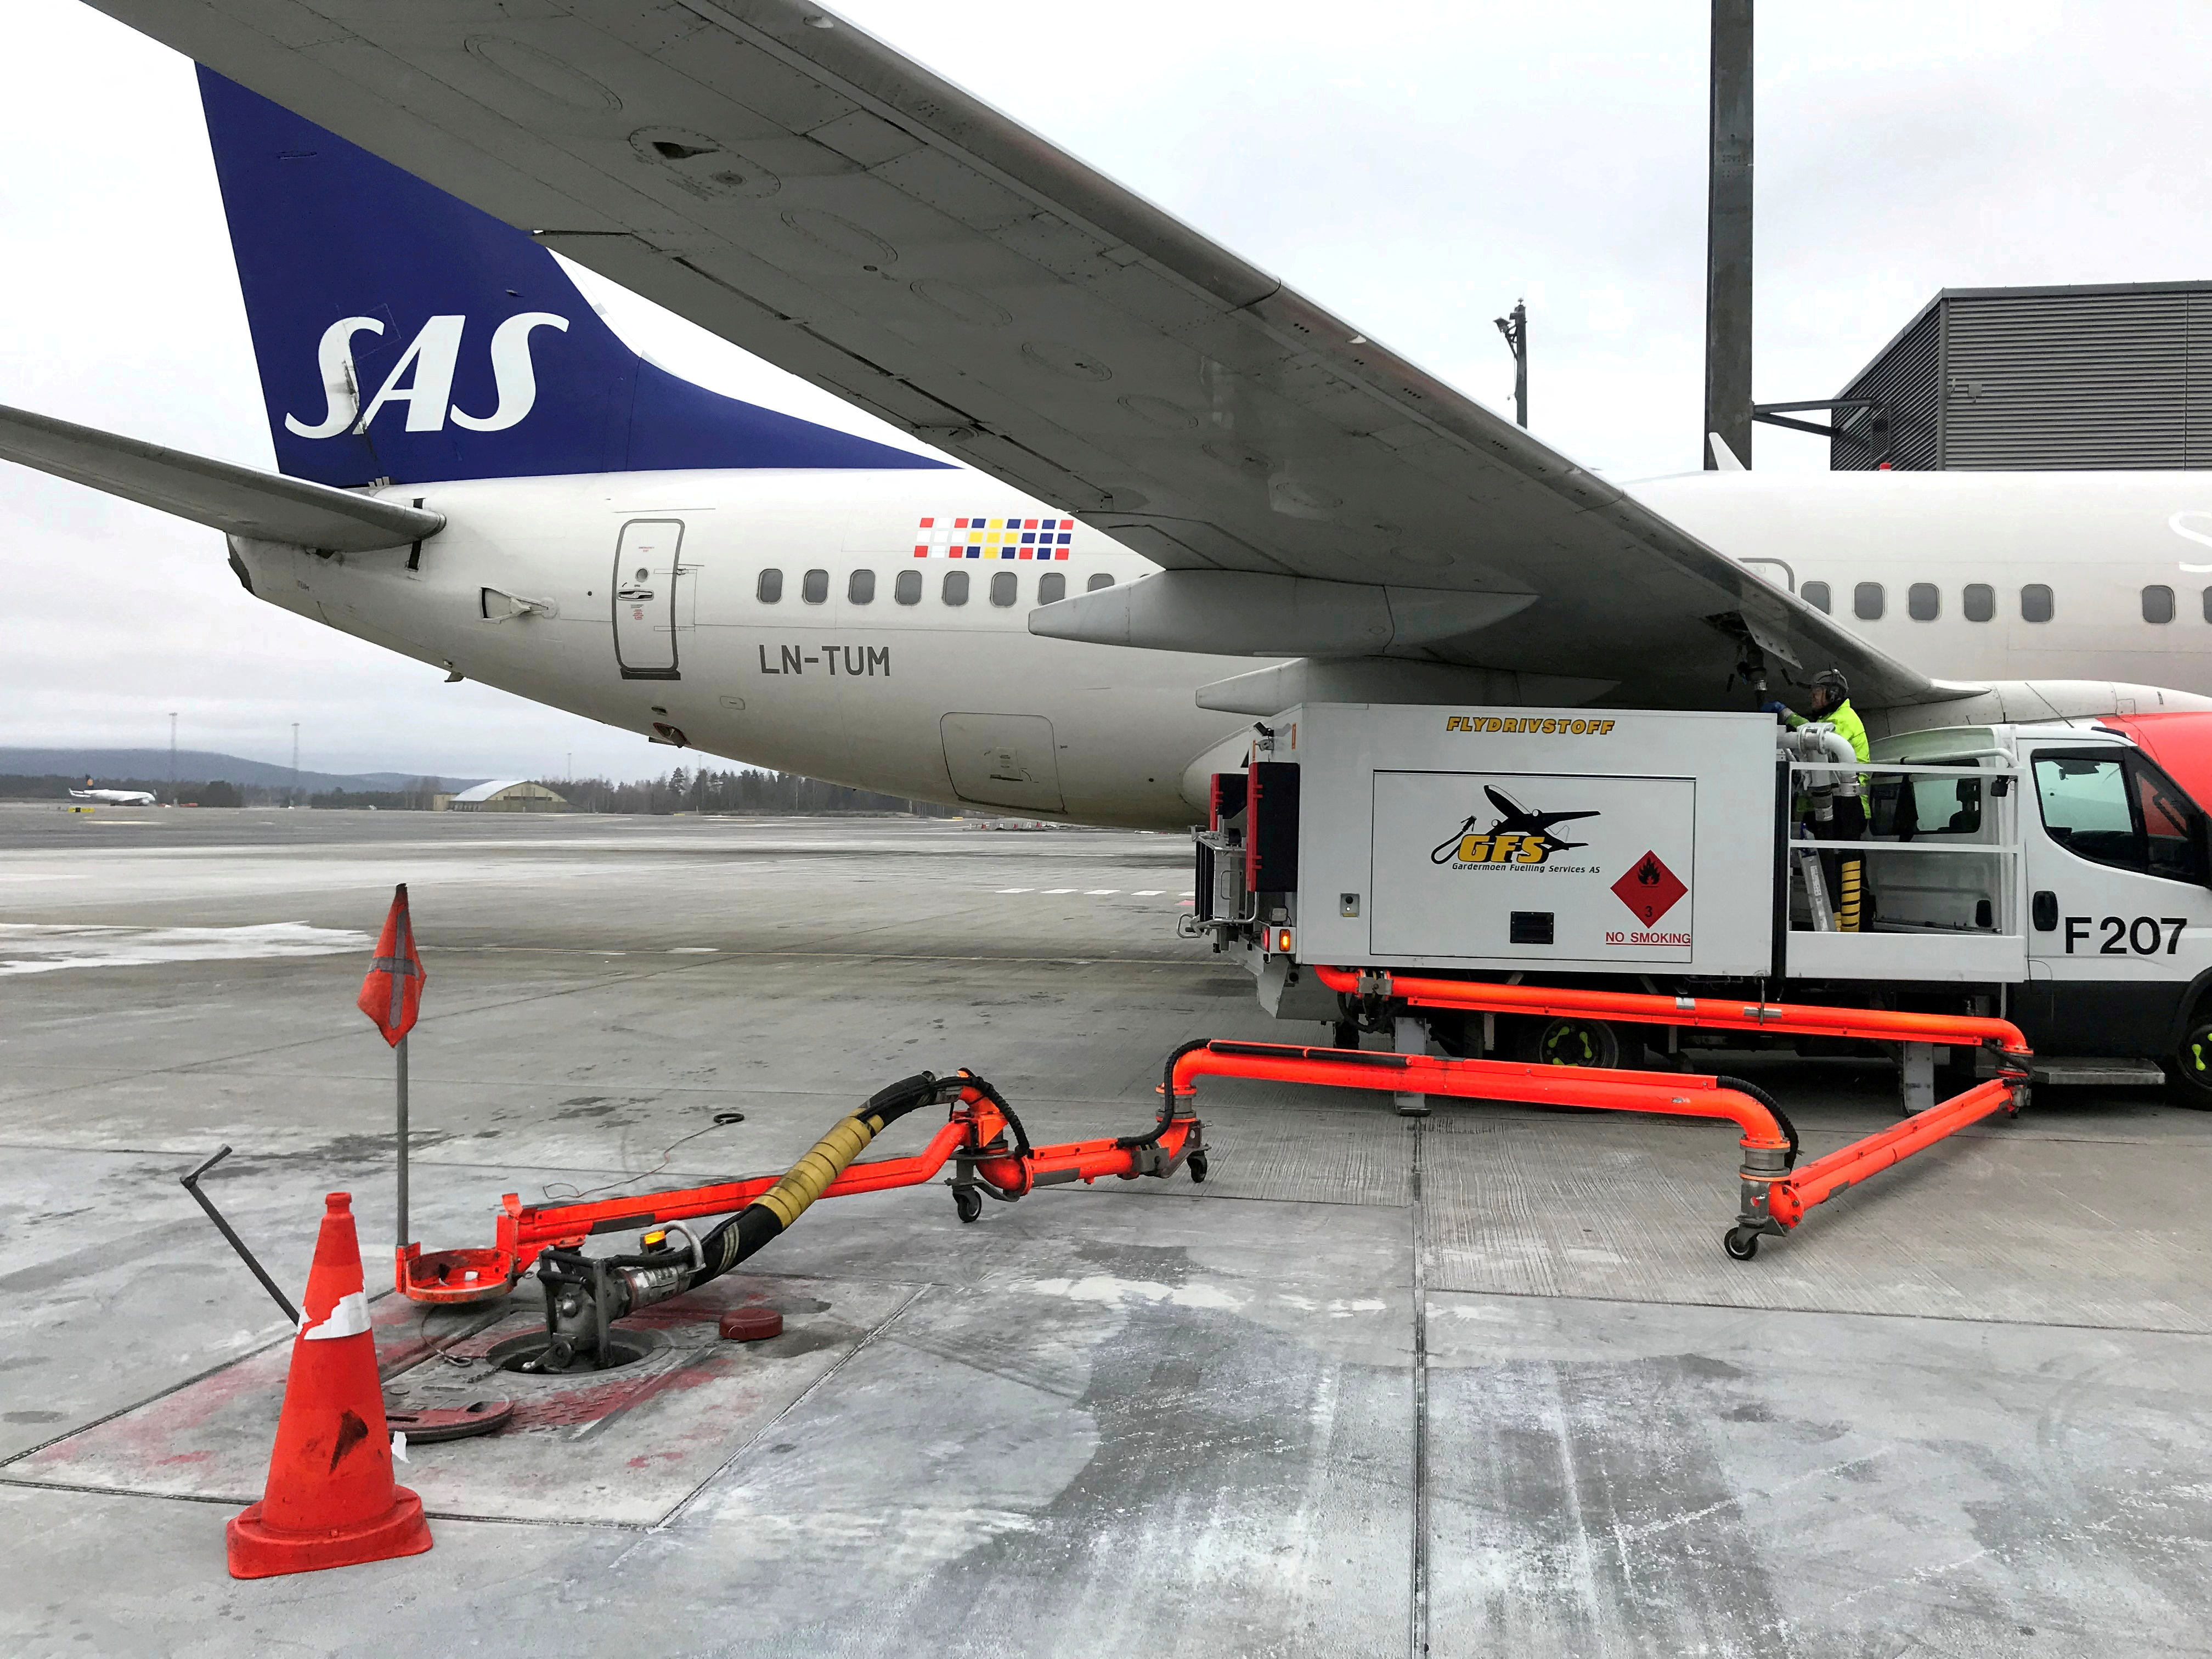 A Scandinavian Airlines (SAS) plane is refuelled at Oslo Gardermoen airport